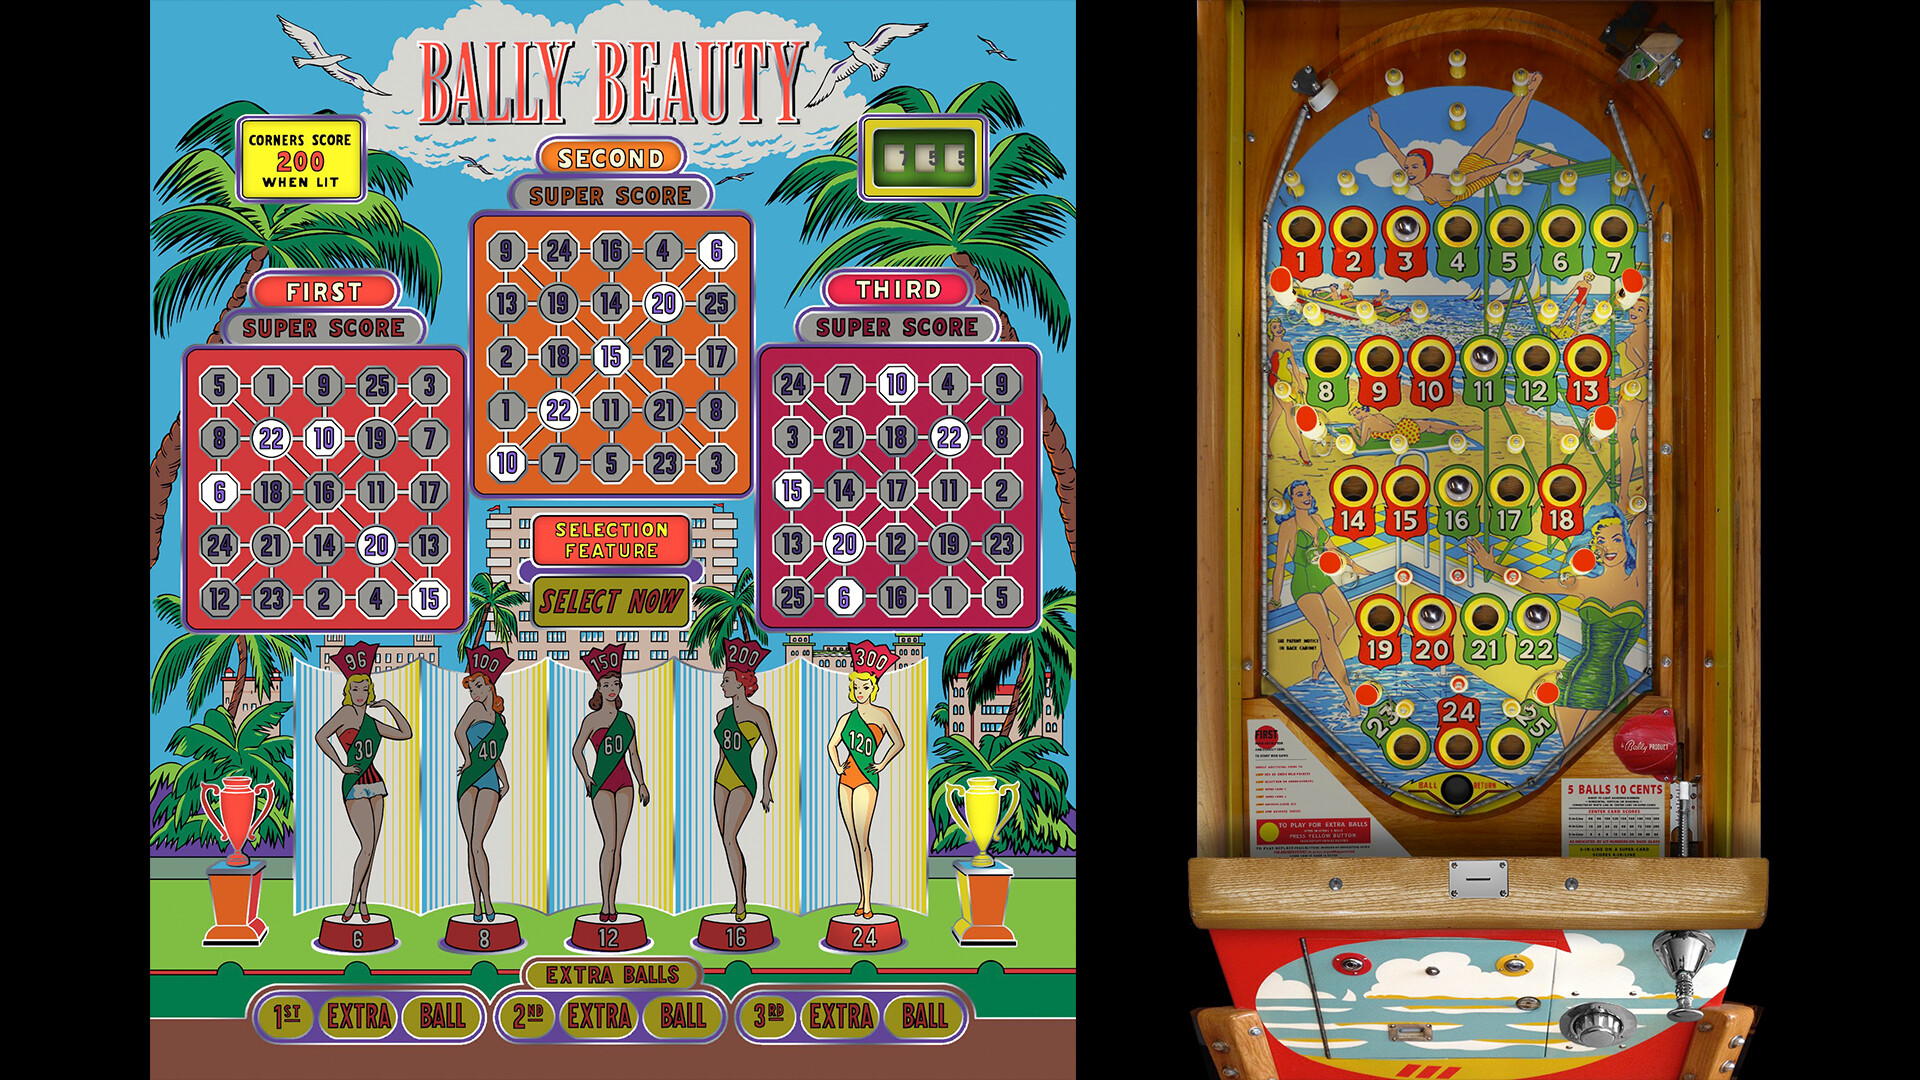 Bingo Pinball Gameroom - Bally Beauty Featured Screenshot #1